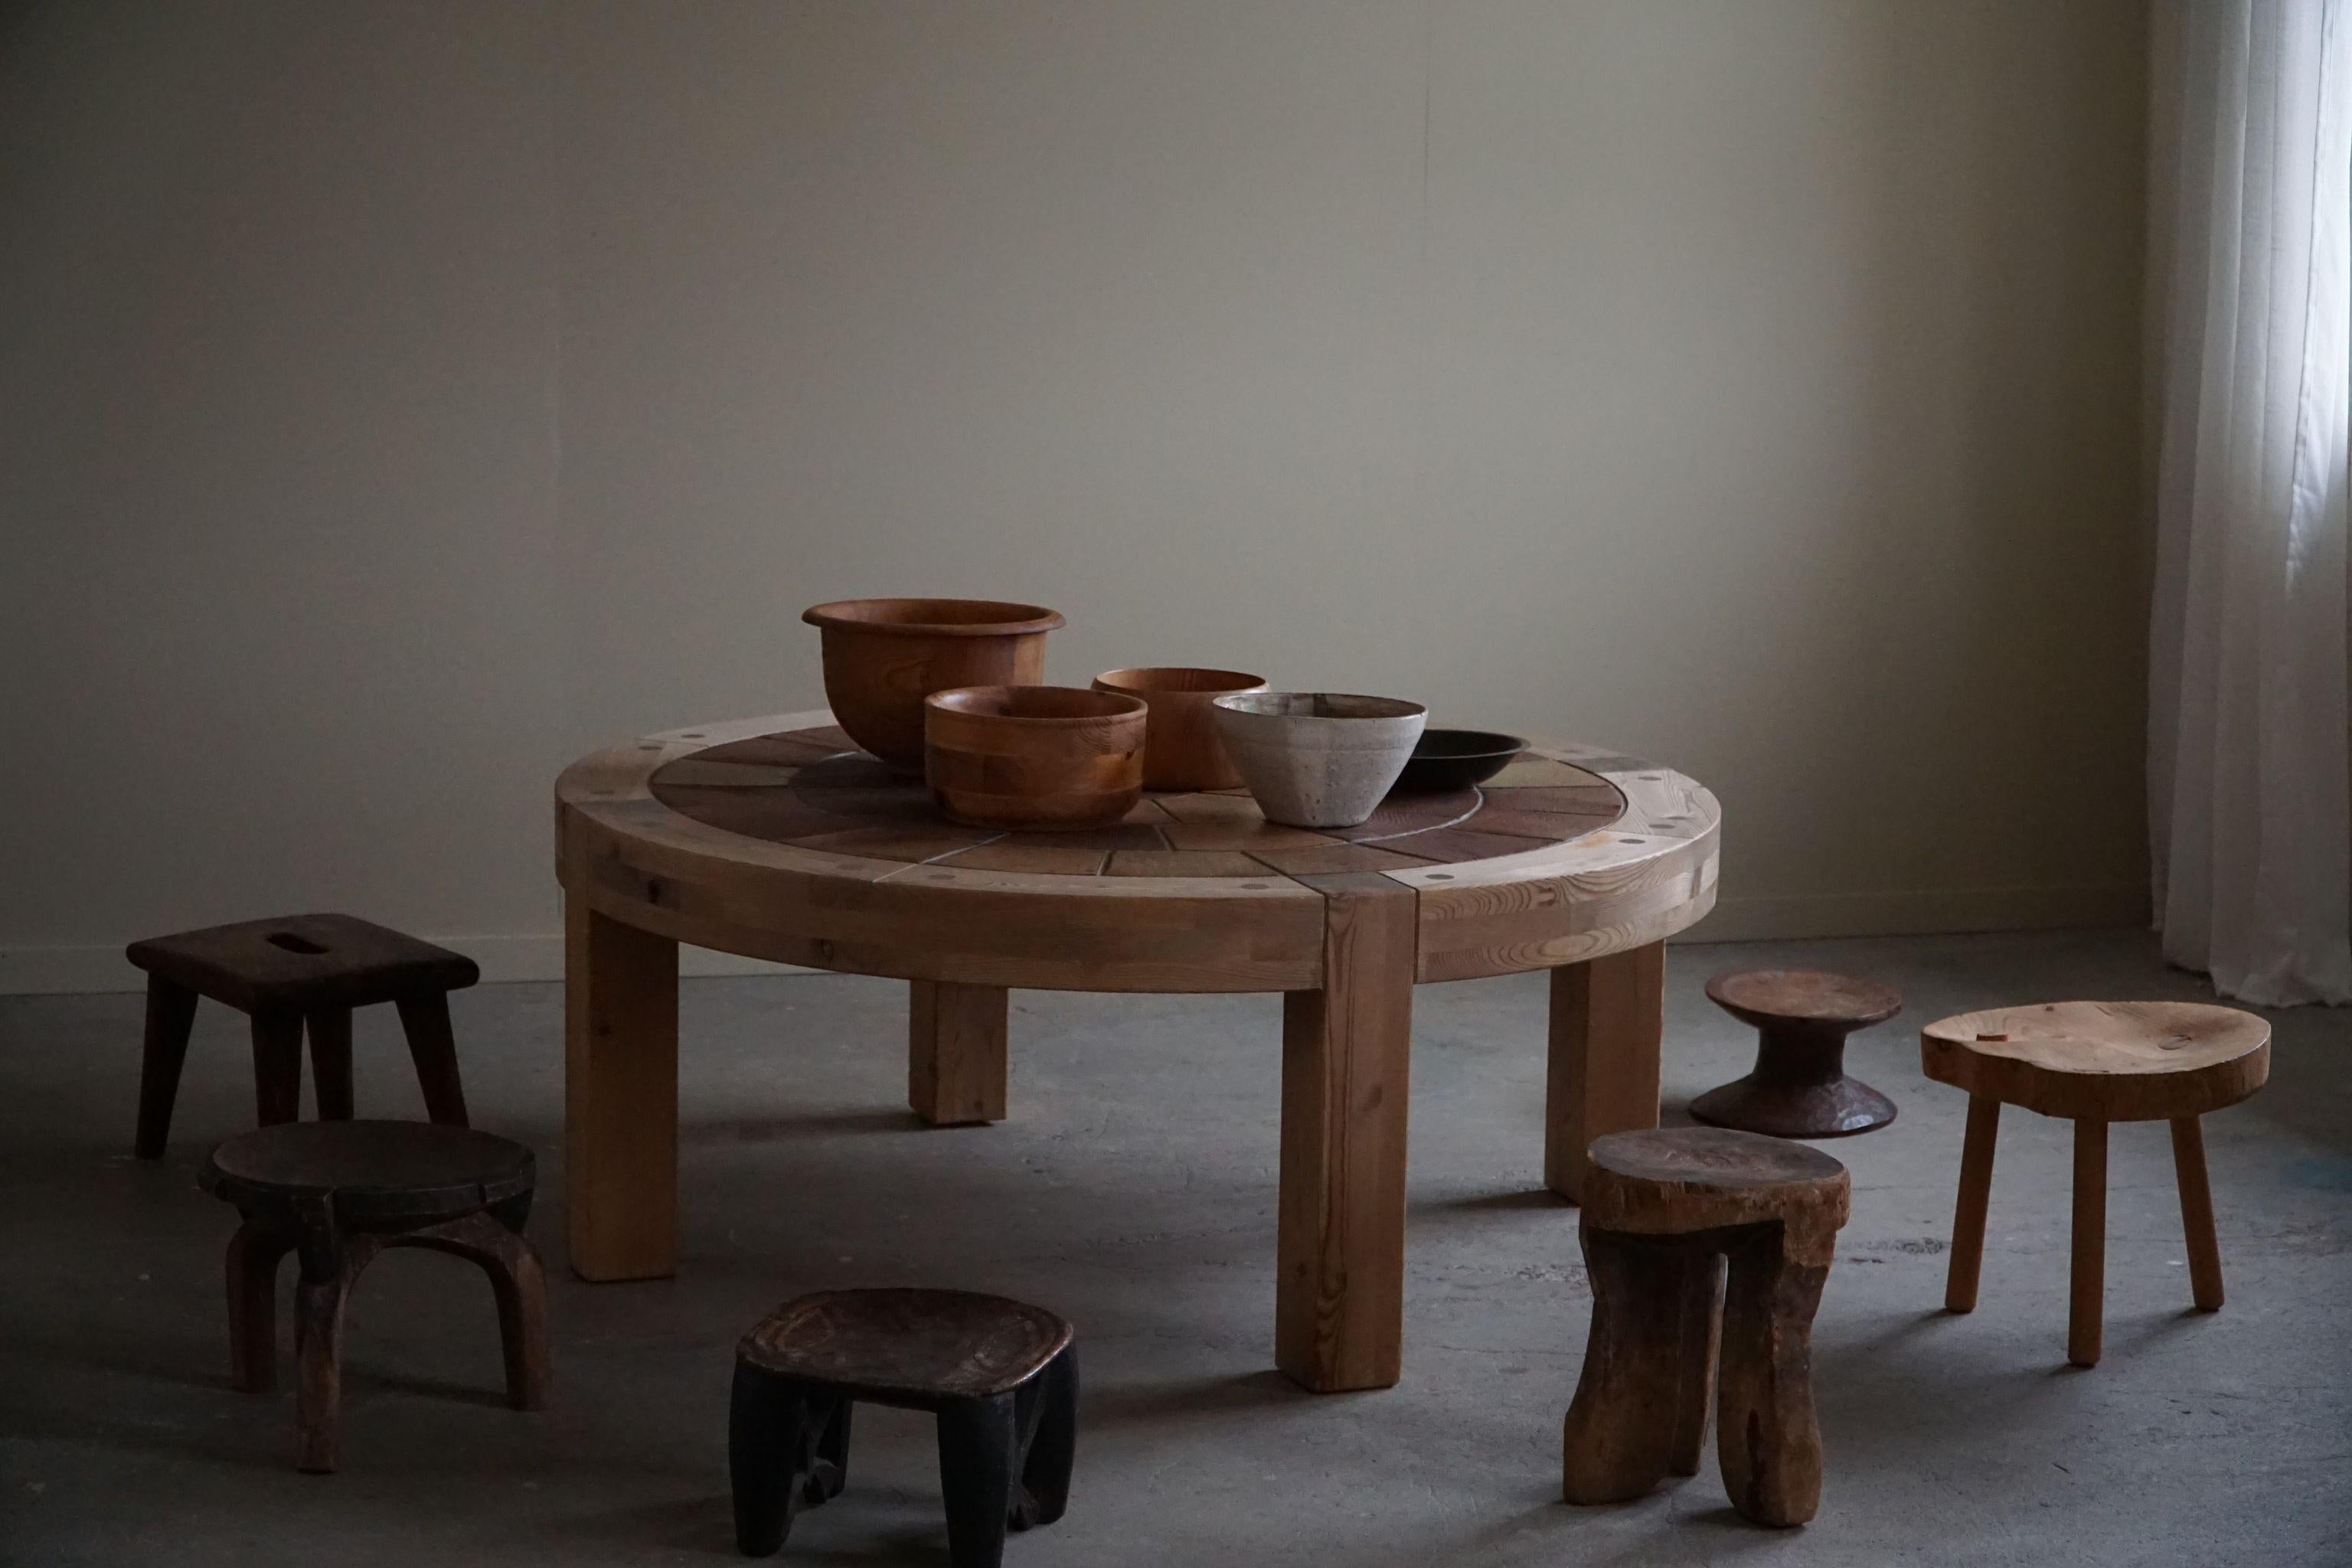 Sallingboe, Large Round Coffee Table in Pine & Ceramic, Danish Design, 1970s For Sale 3